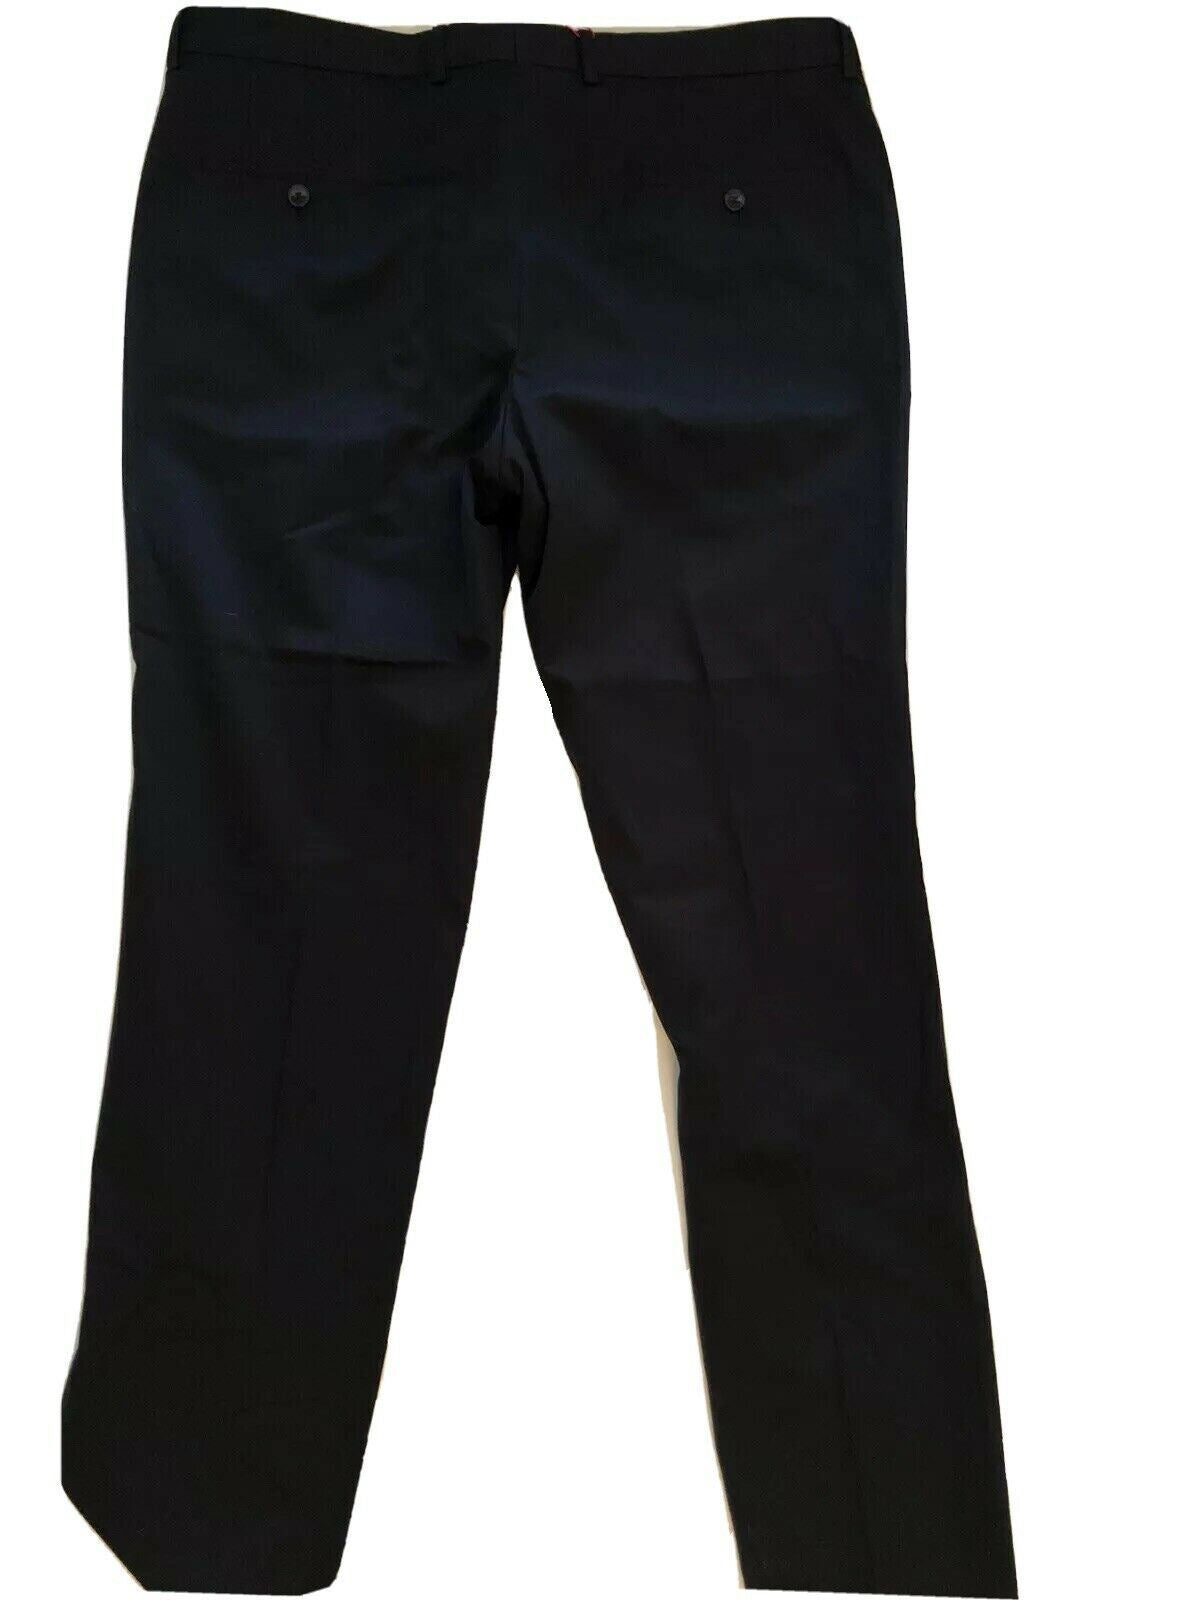 NWT $225 Boss Hugo Boss C-Genesis Mens Wool Dark Blue Dress Pants Size 38R US